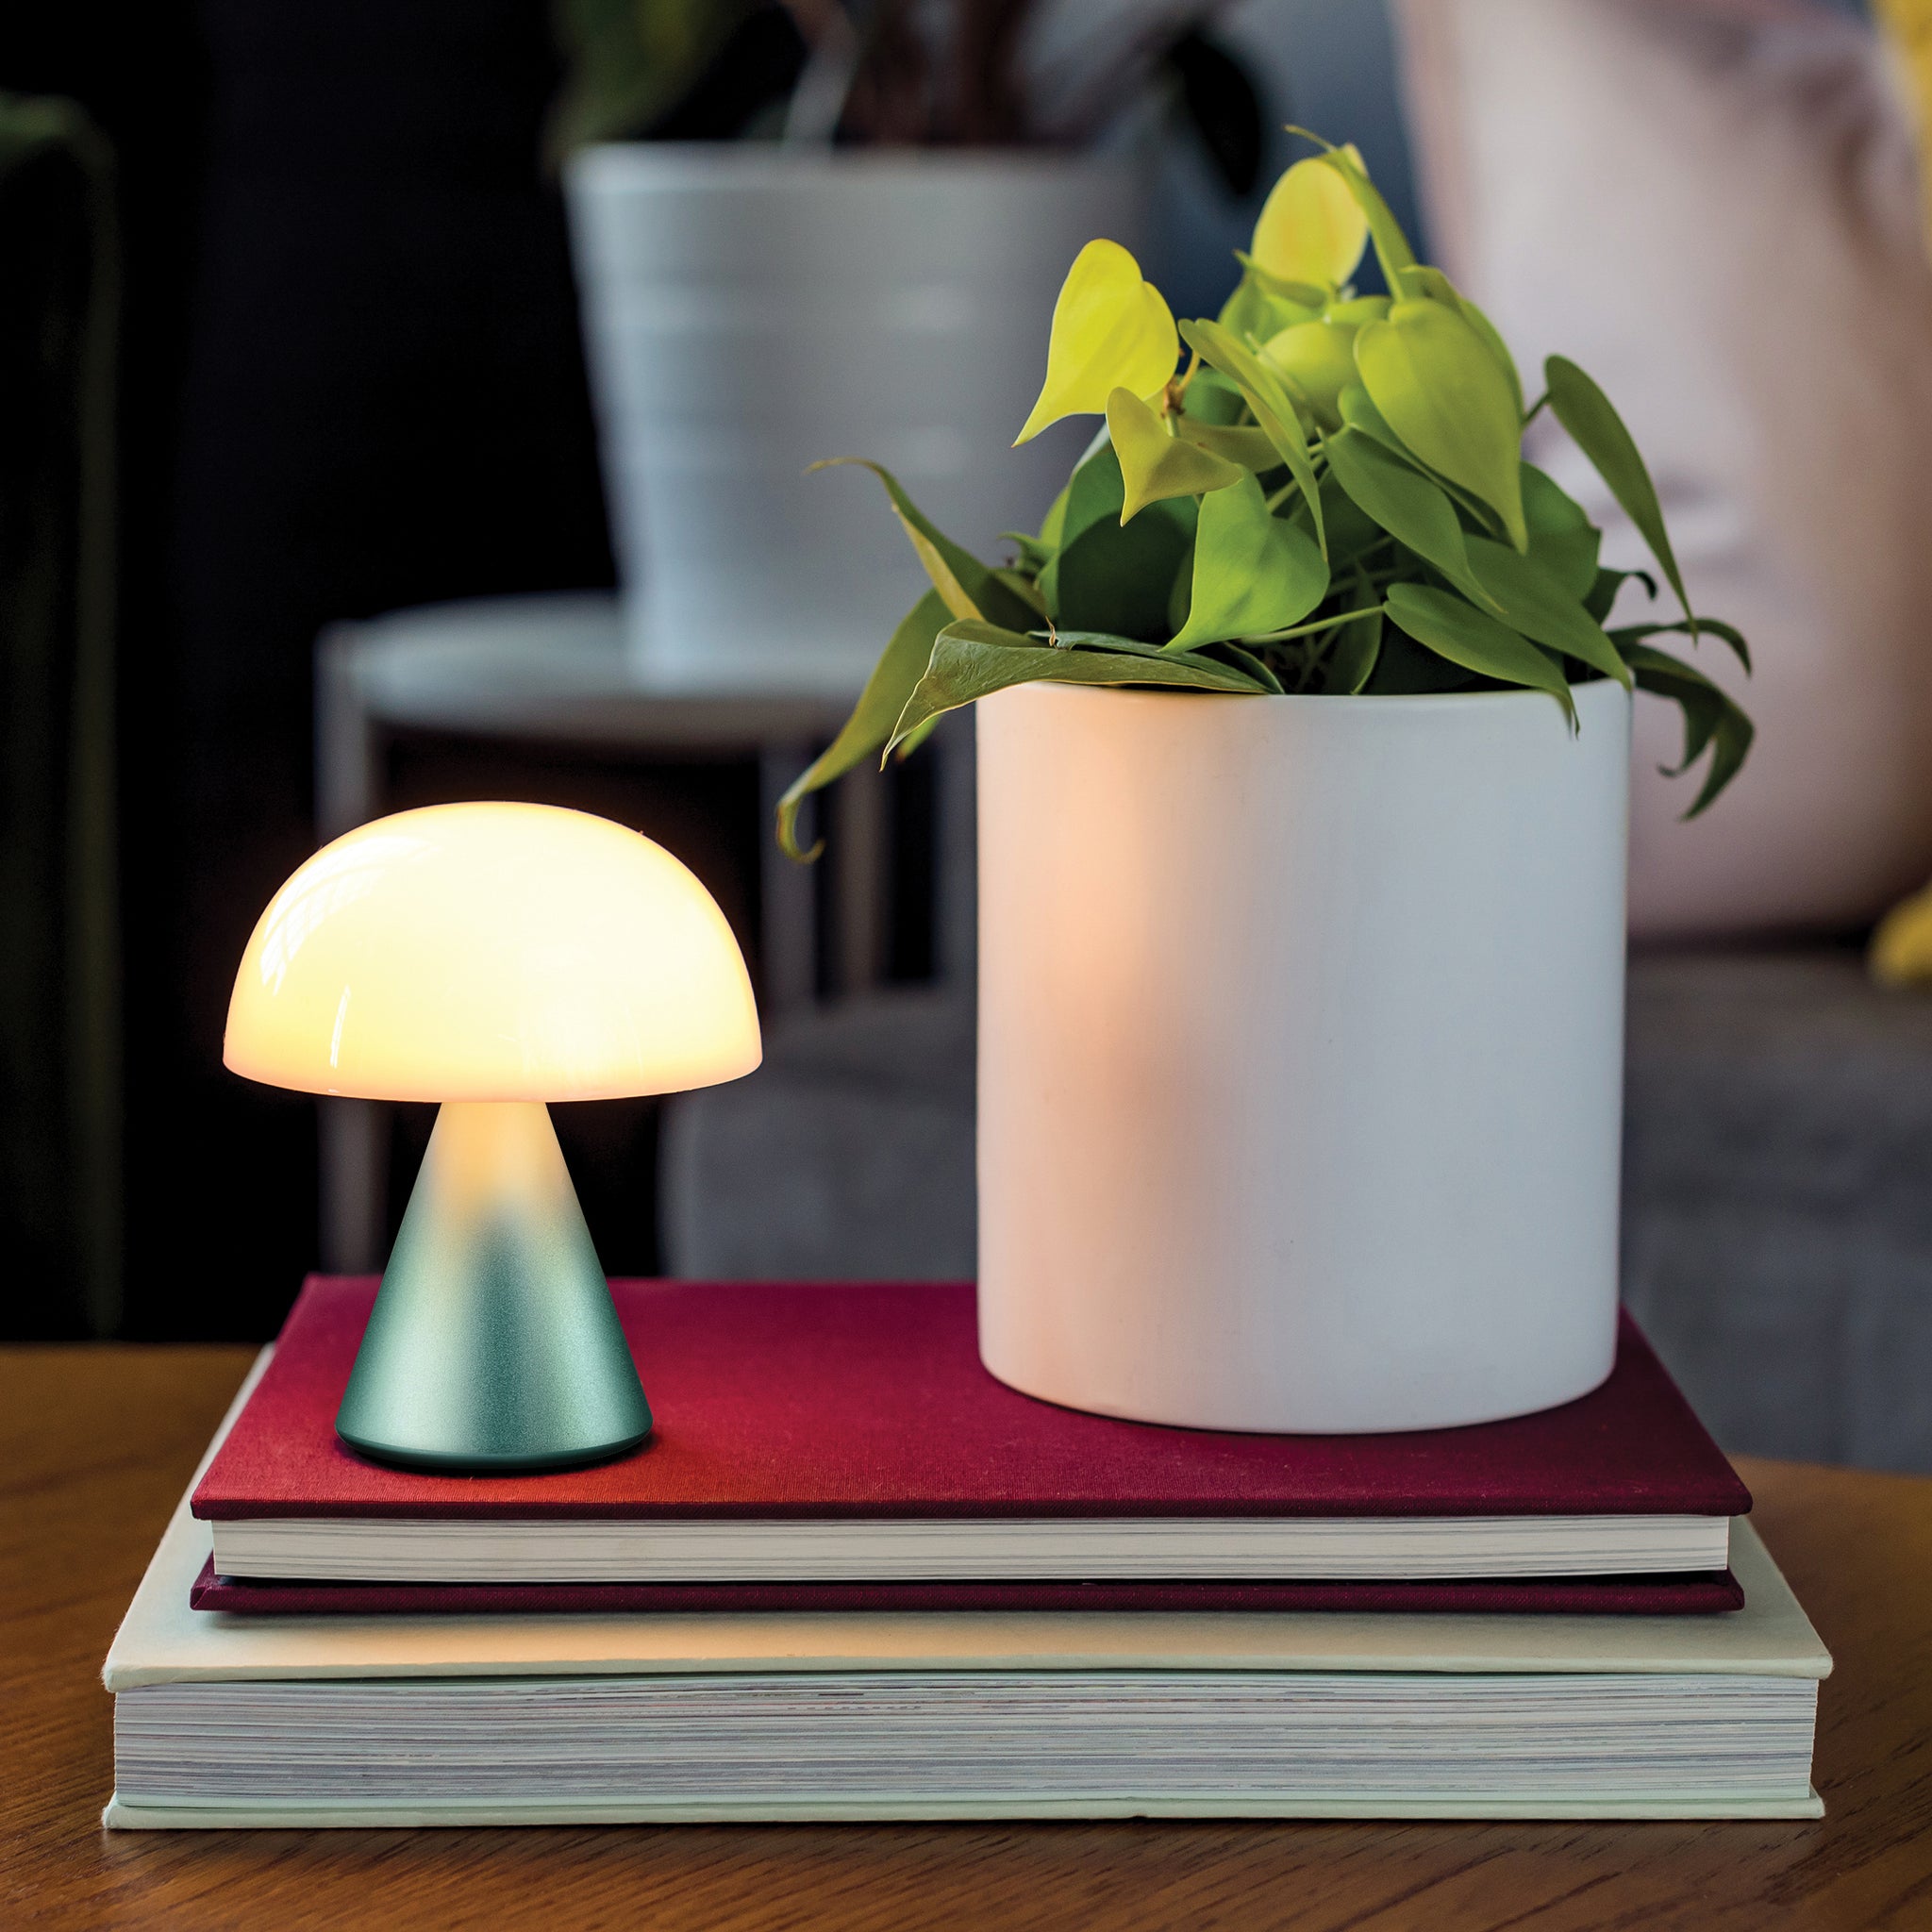 Lexon Mina Medium Mint Groen│LH64M1│Oplaadbare LED-Lamp│op boeken naast plant